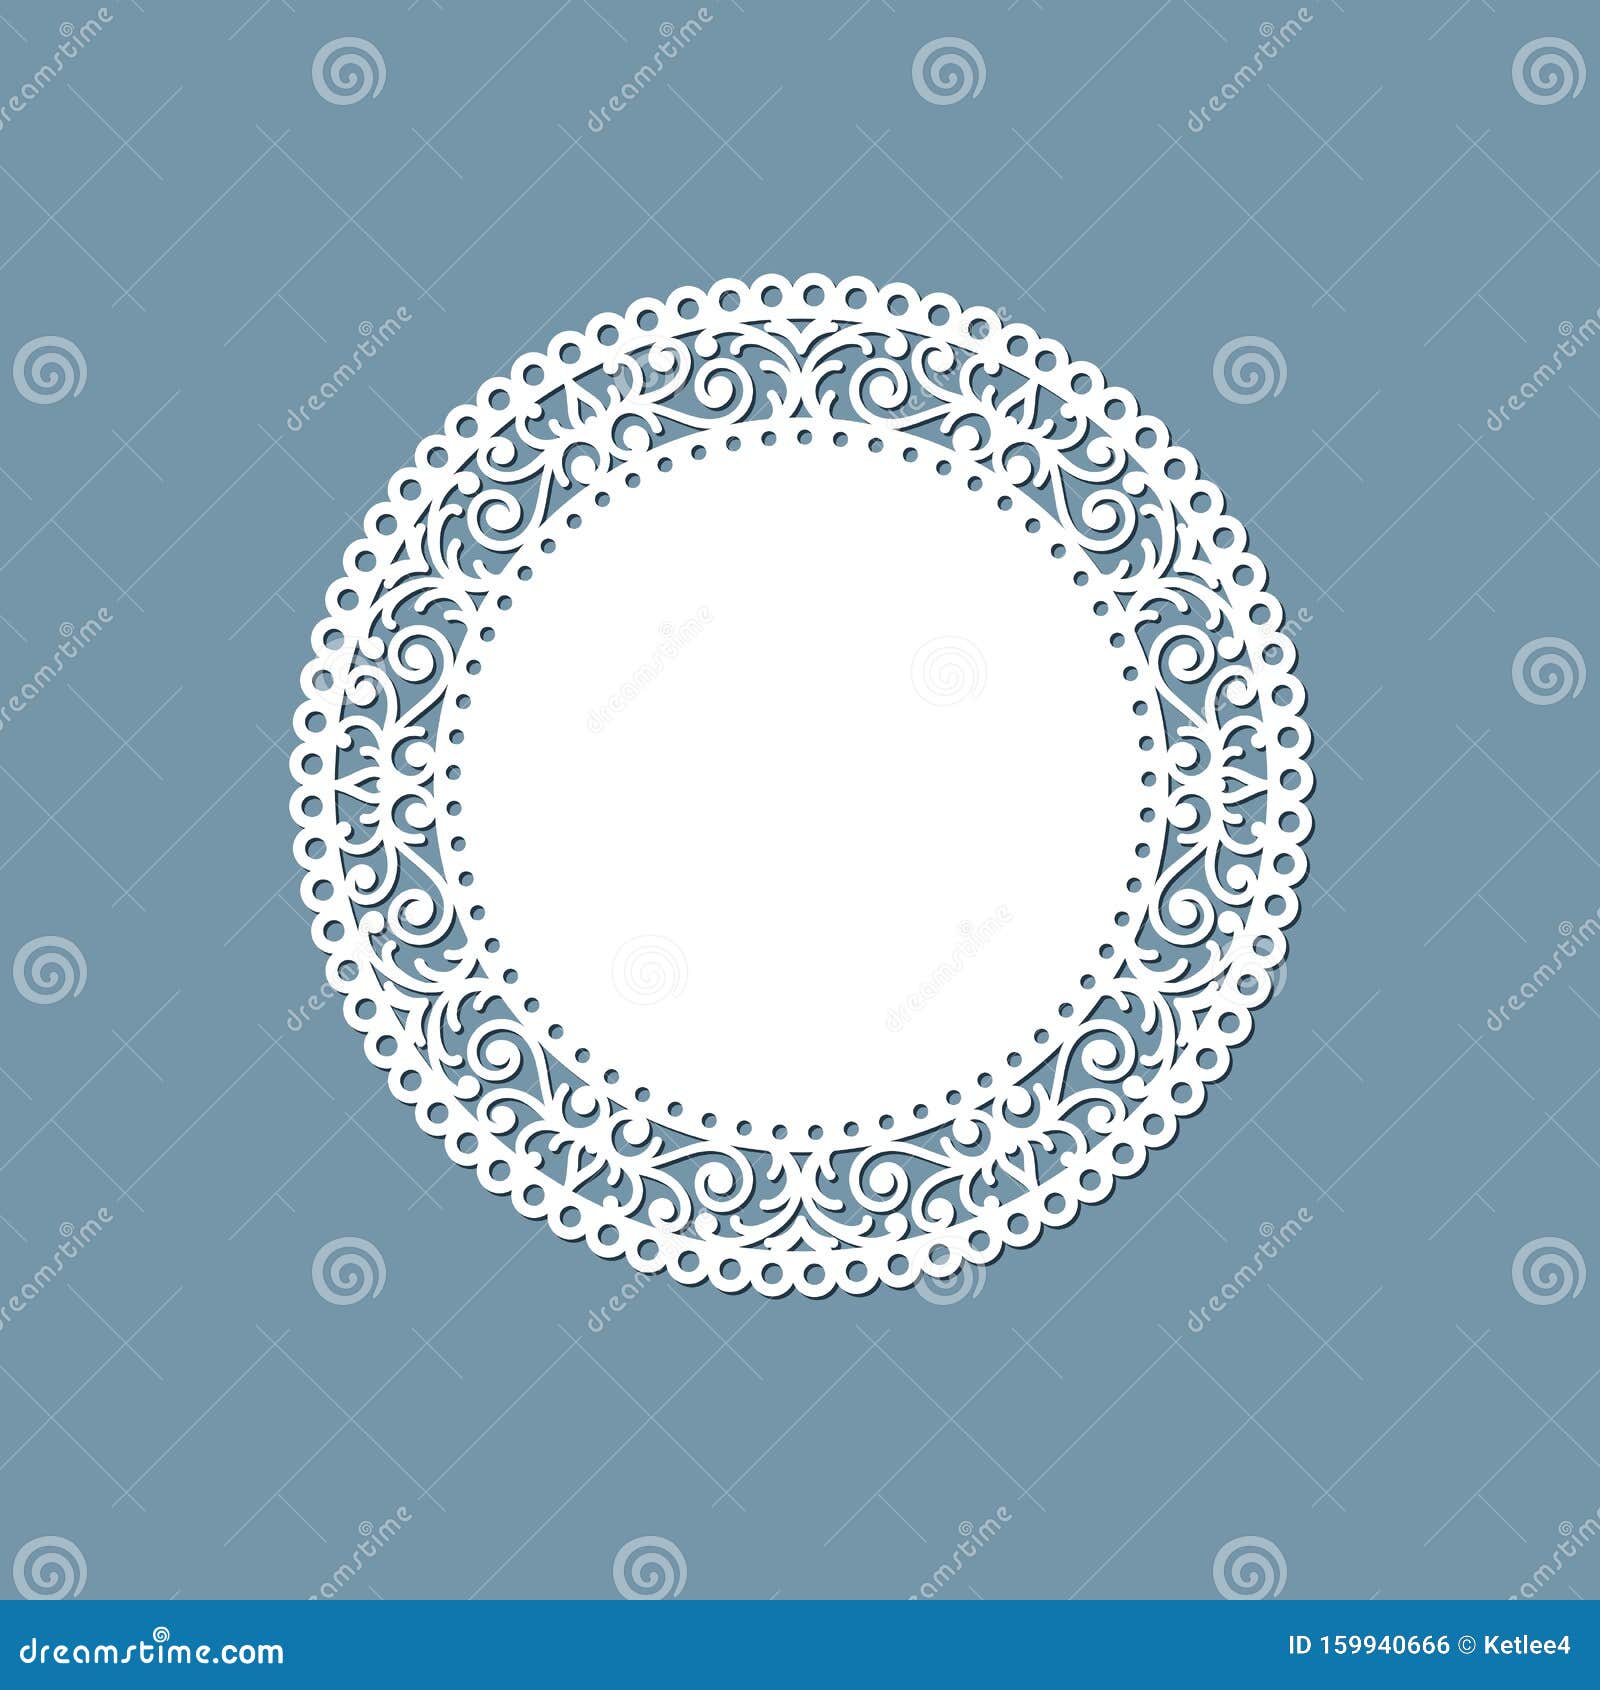 lasercut lace doily  round pattern ornament template mockup of a round white lace doily napkin lasercut frame  